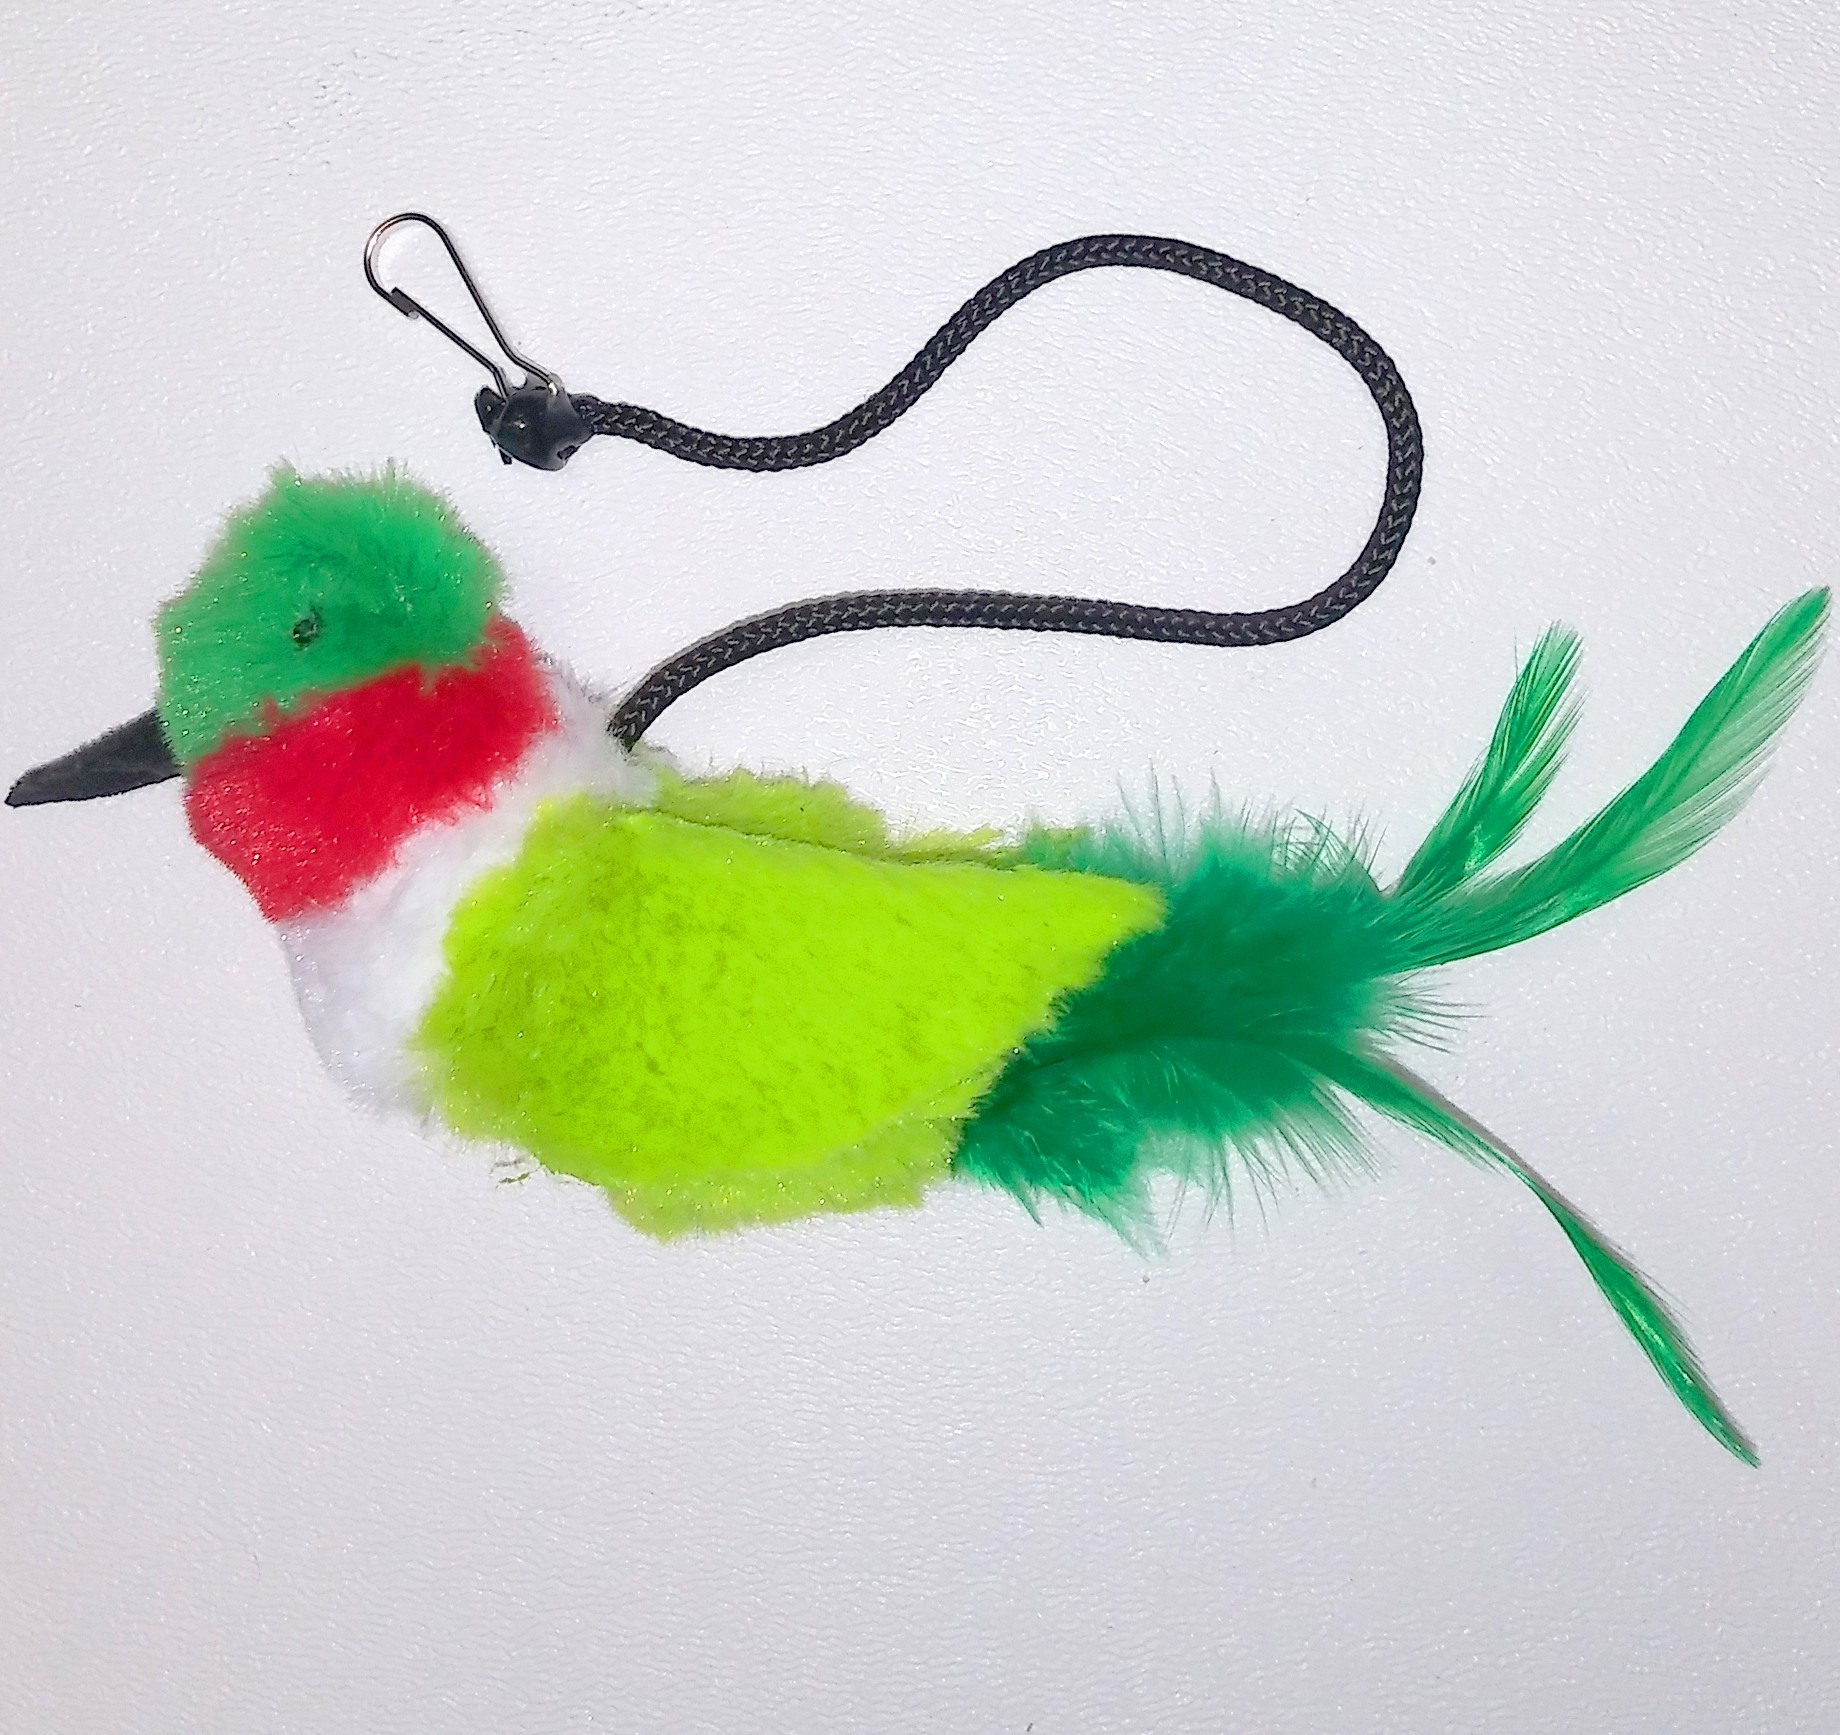 Hummingbird Chirping Toy